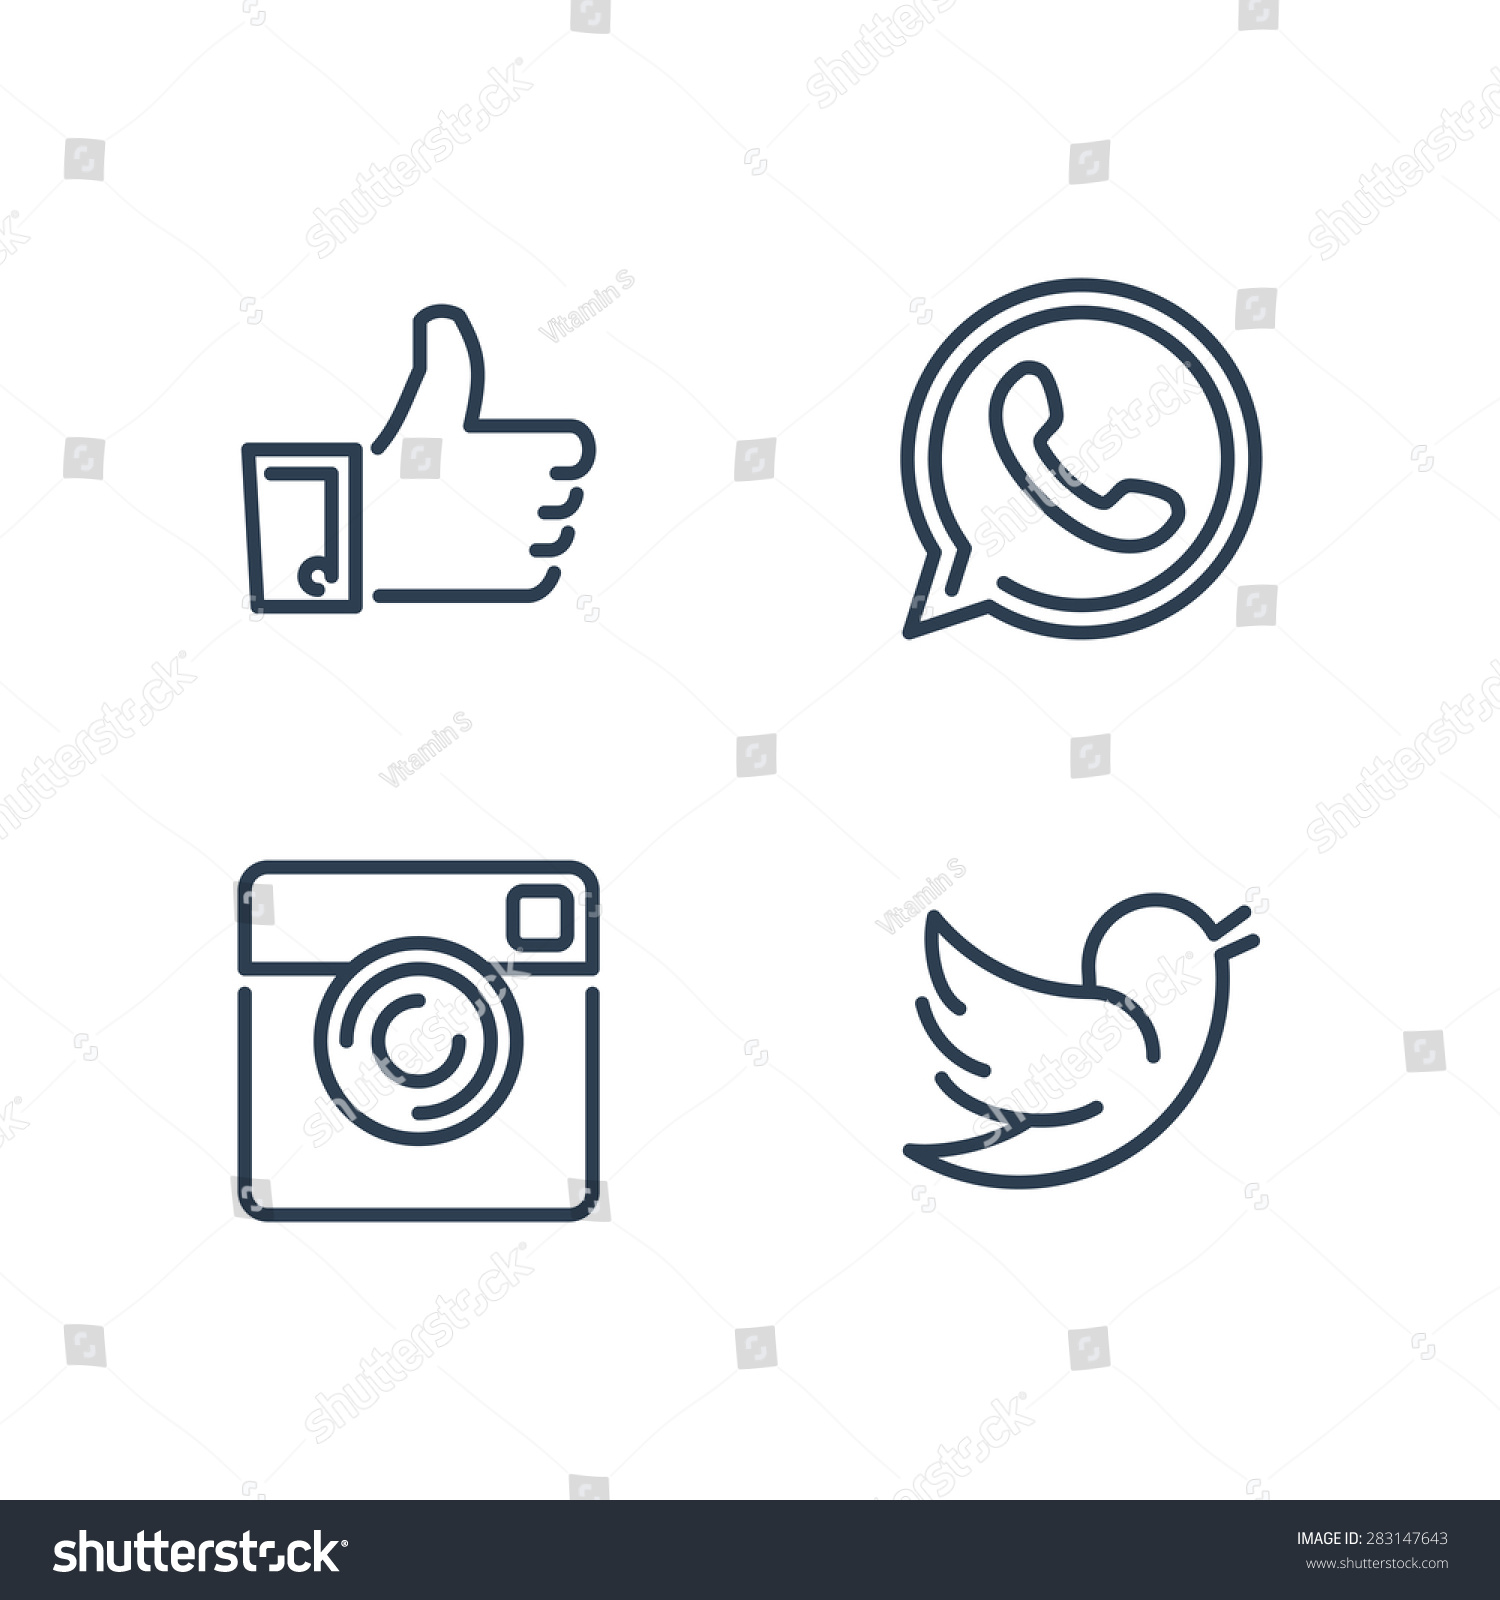 Line designed vector icons of like, handset, camera and bird for social media, websites, interfaces. Like icon eps. Social media icons set. #283147643